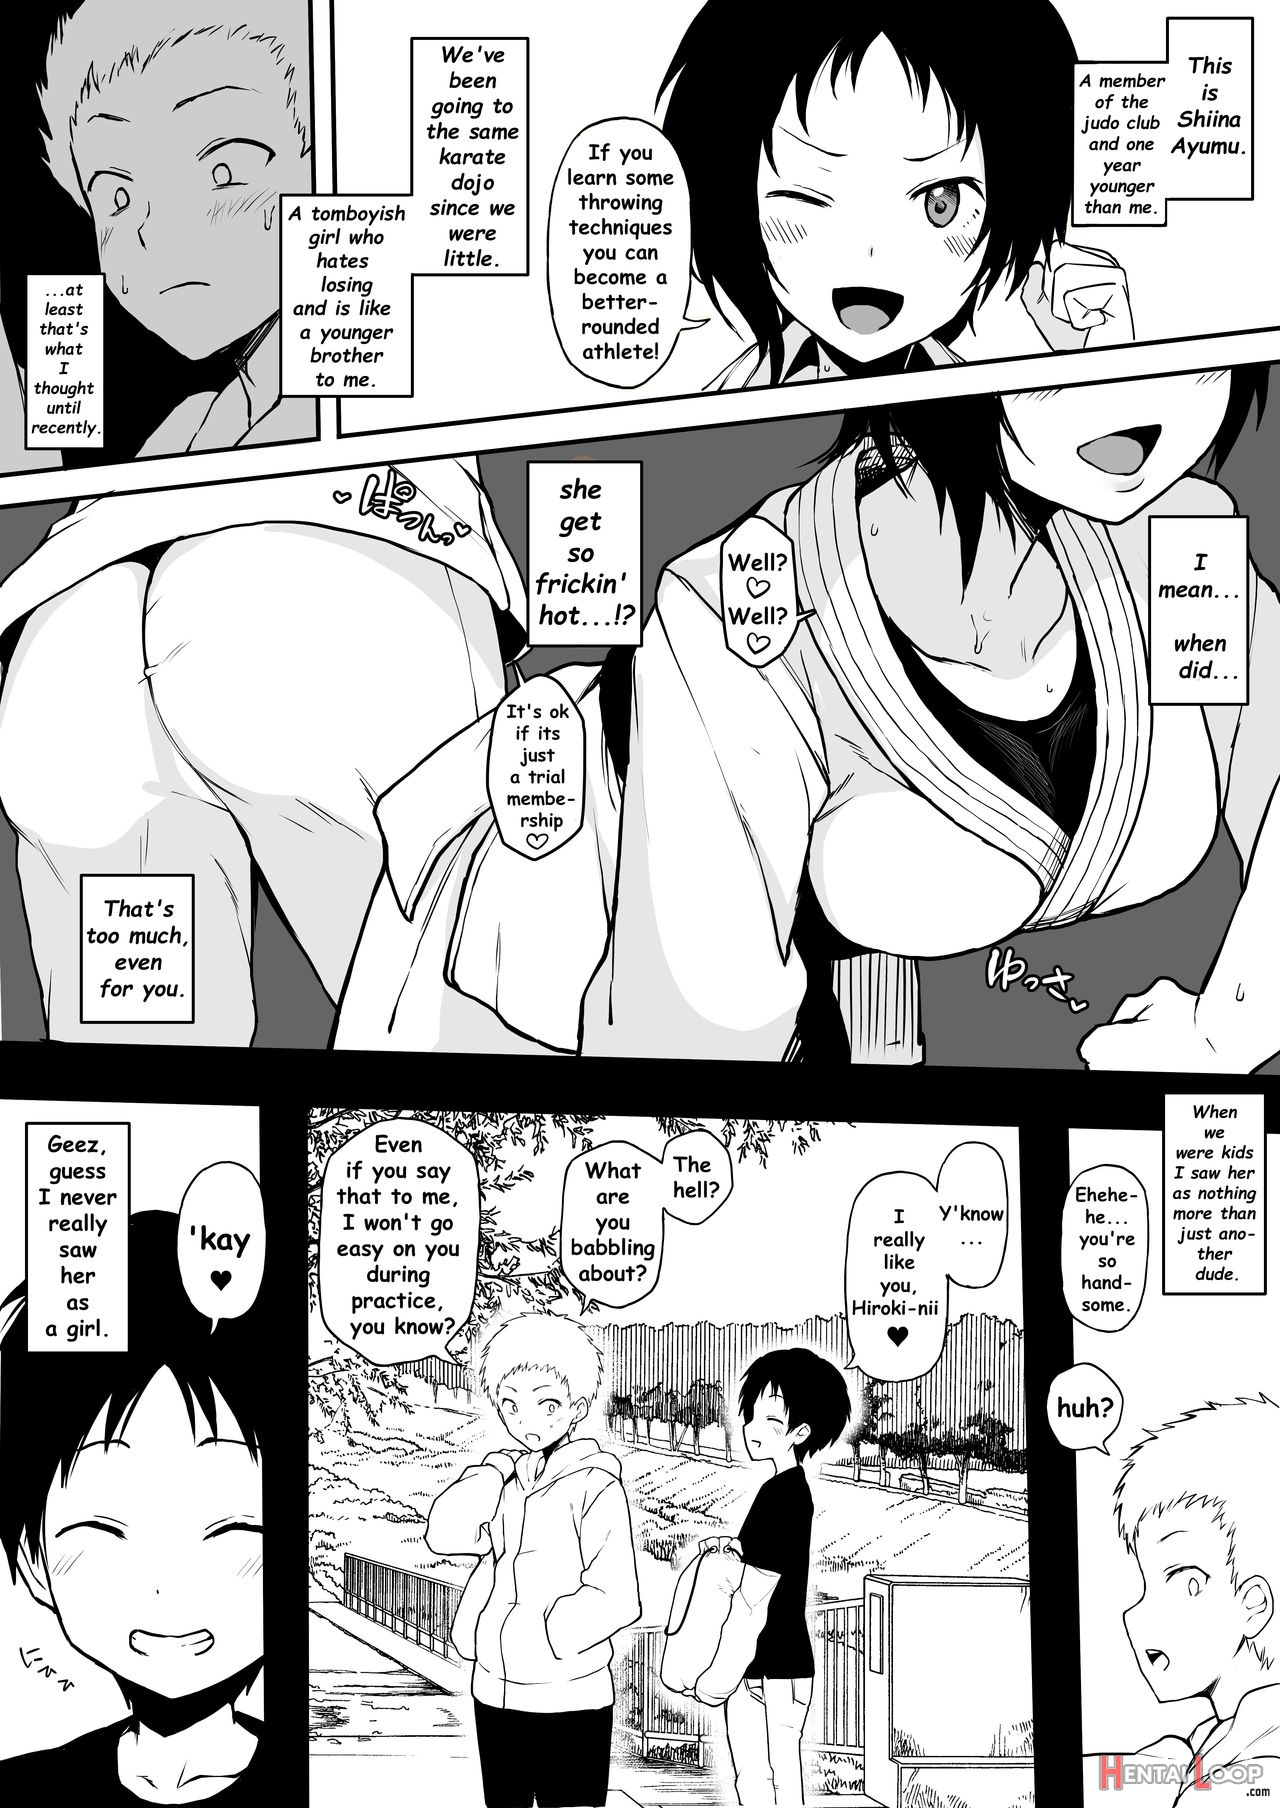 Kokujin No Tenkousei Ntr Ru Chapters 1-6 Part 1 Plus Bonus Chapter: Stolen Mother’s Breasts page 45